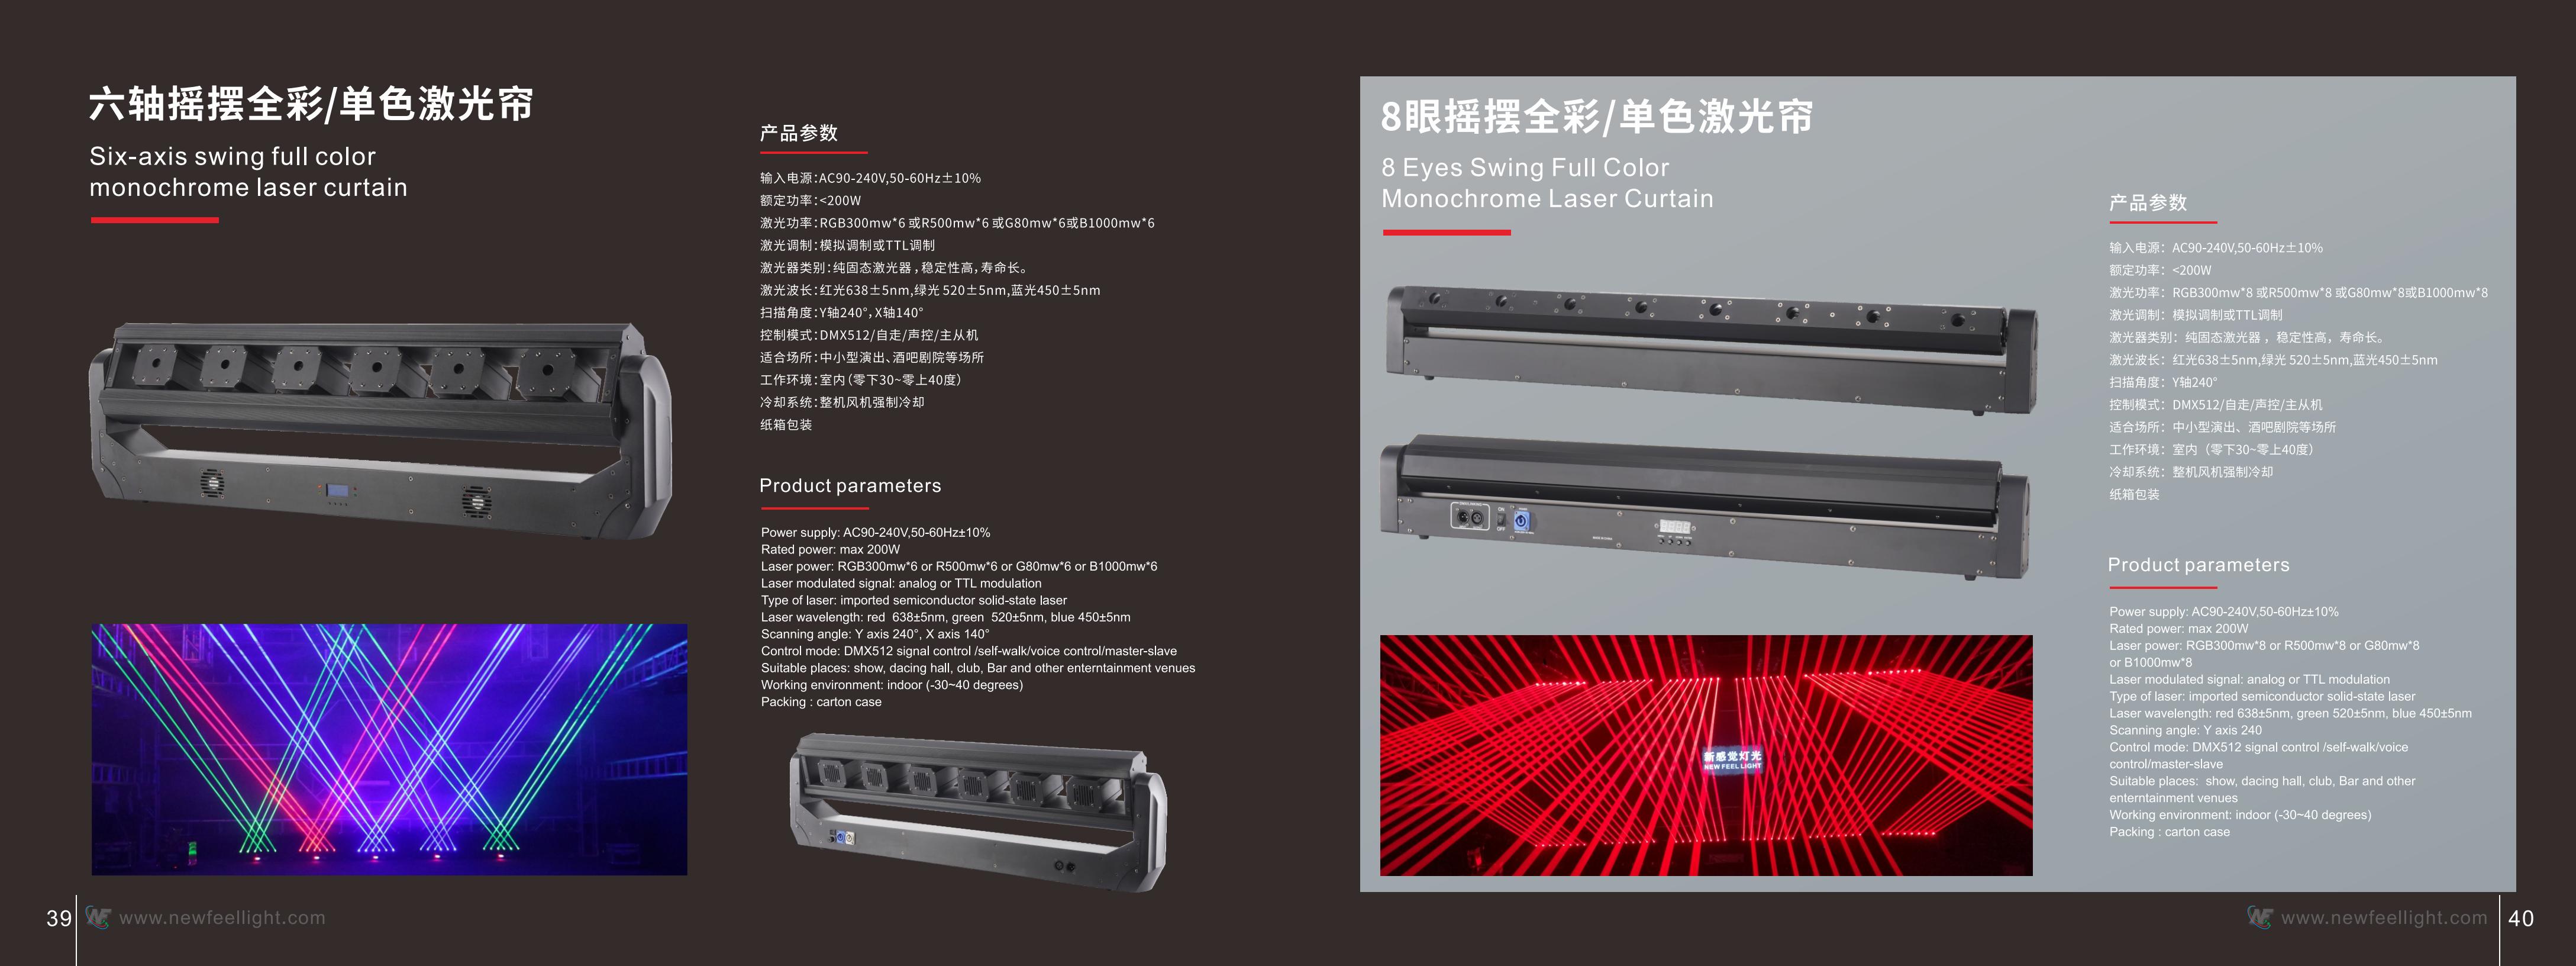 NewFeel Laser Light Product Catalogue_21.jpg